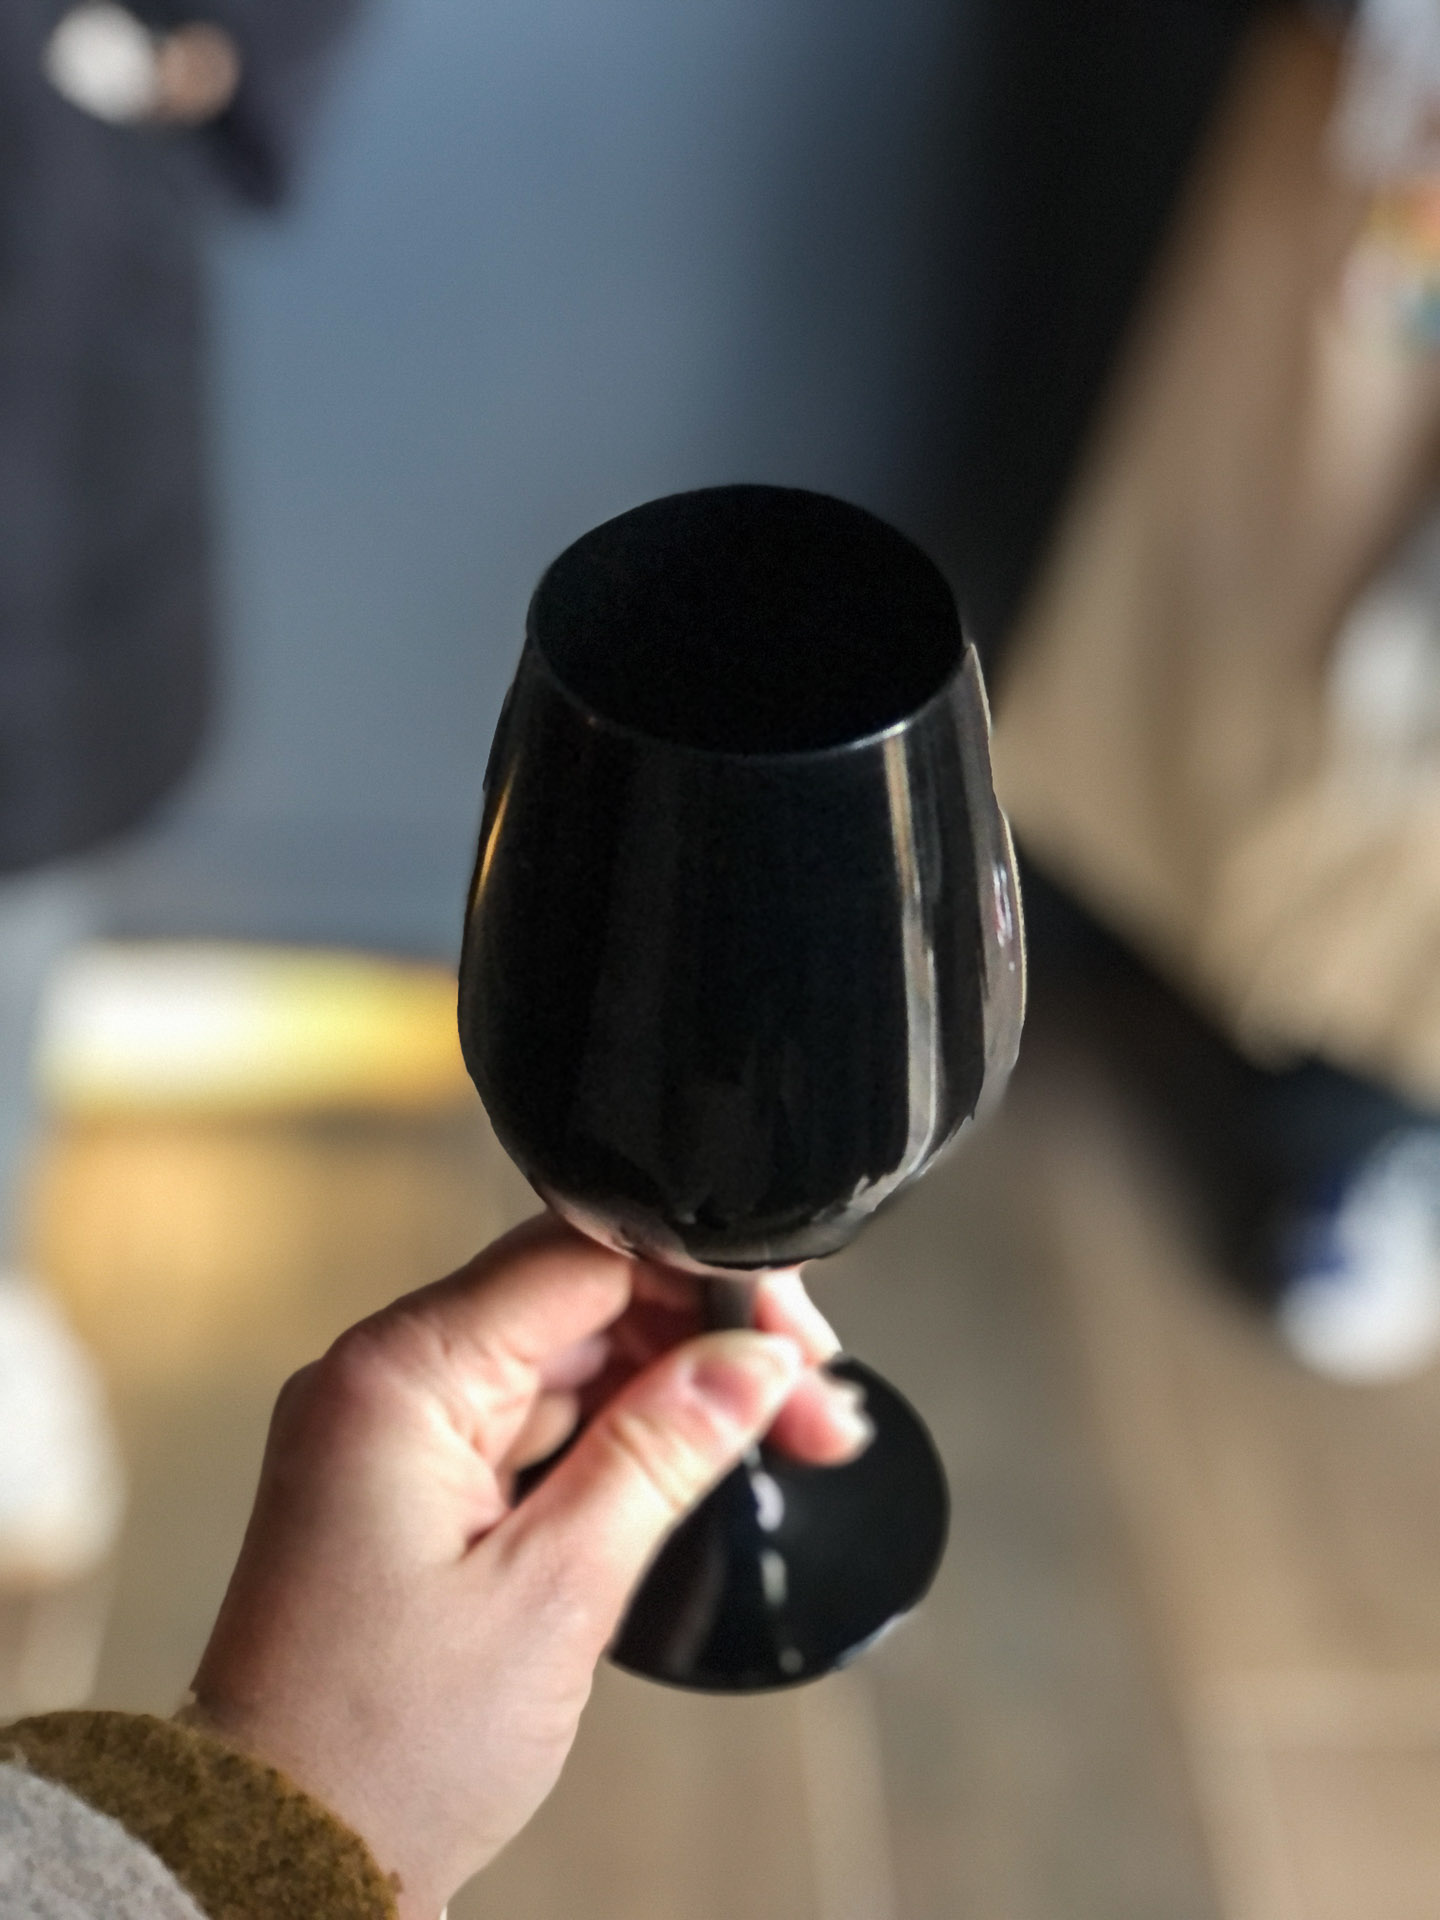 black wine glass at the Javier san pedro winery in rioja alavesa